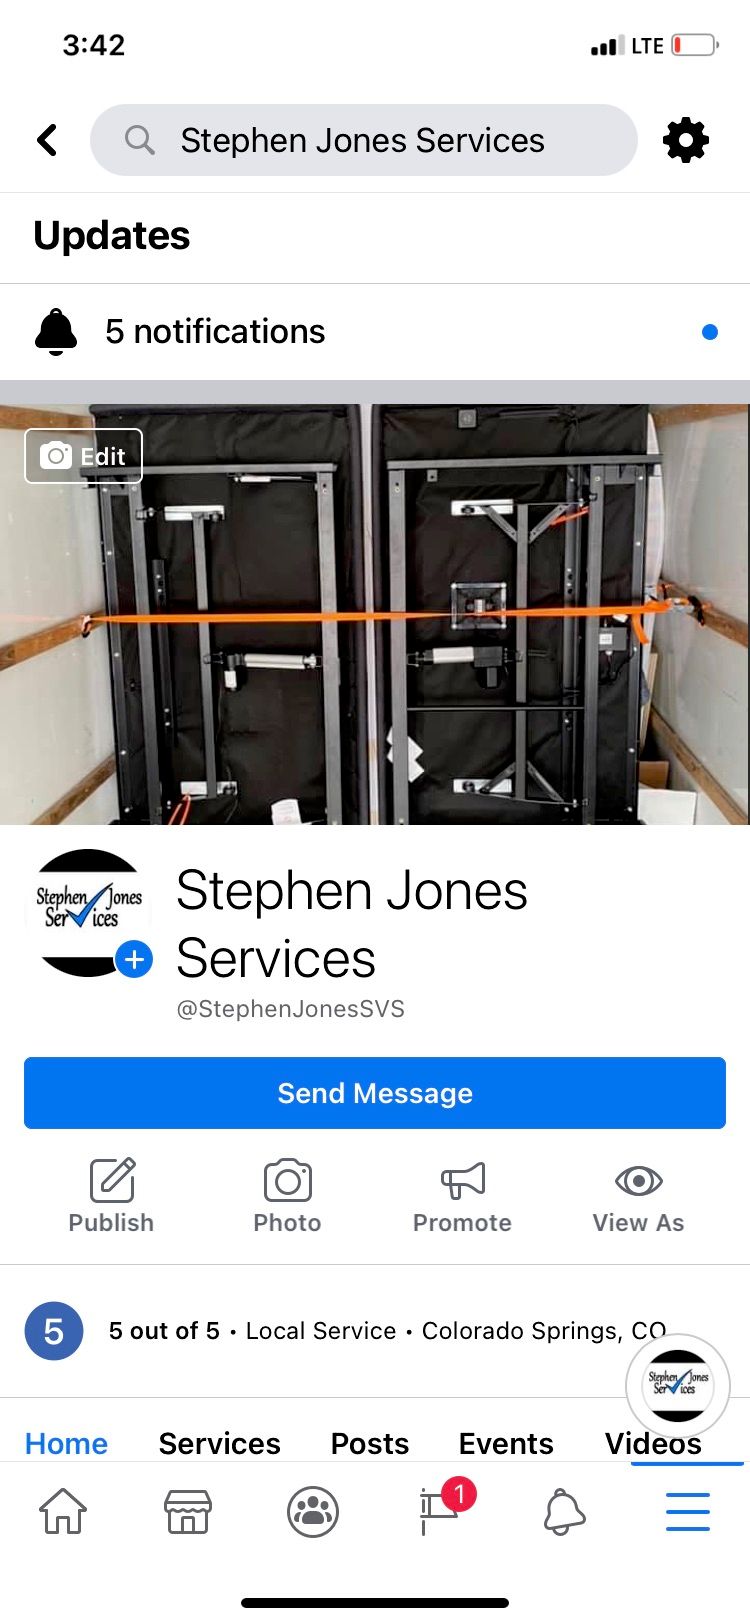 Stephen Jones Services